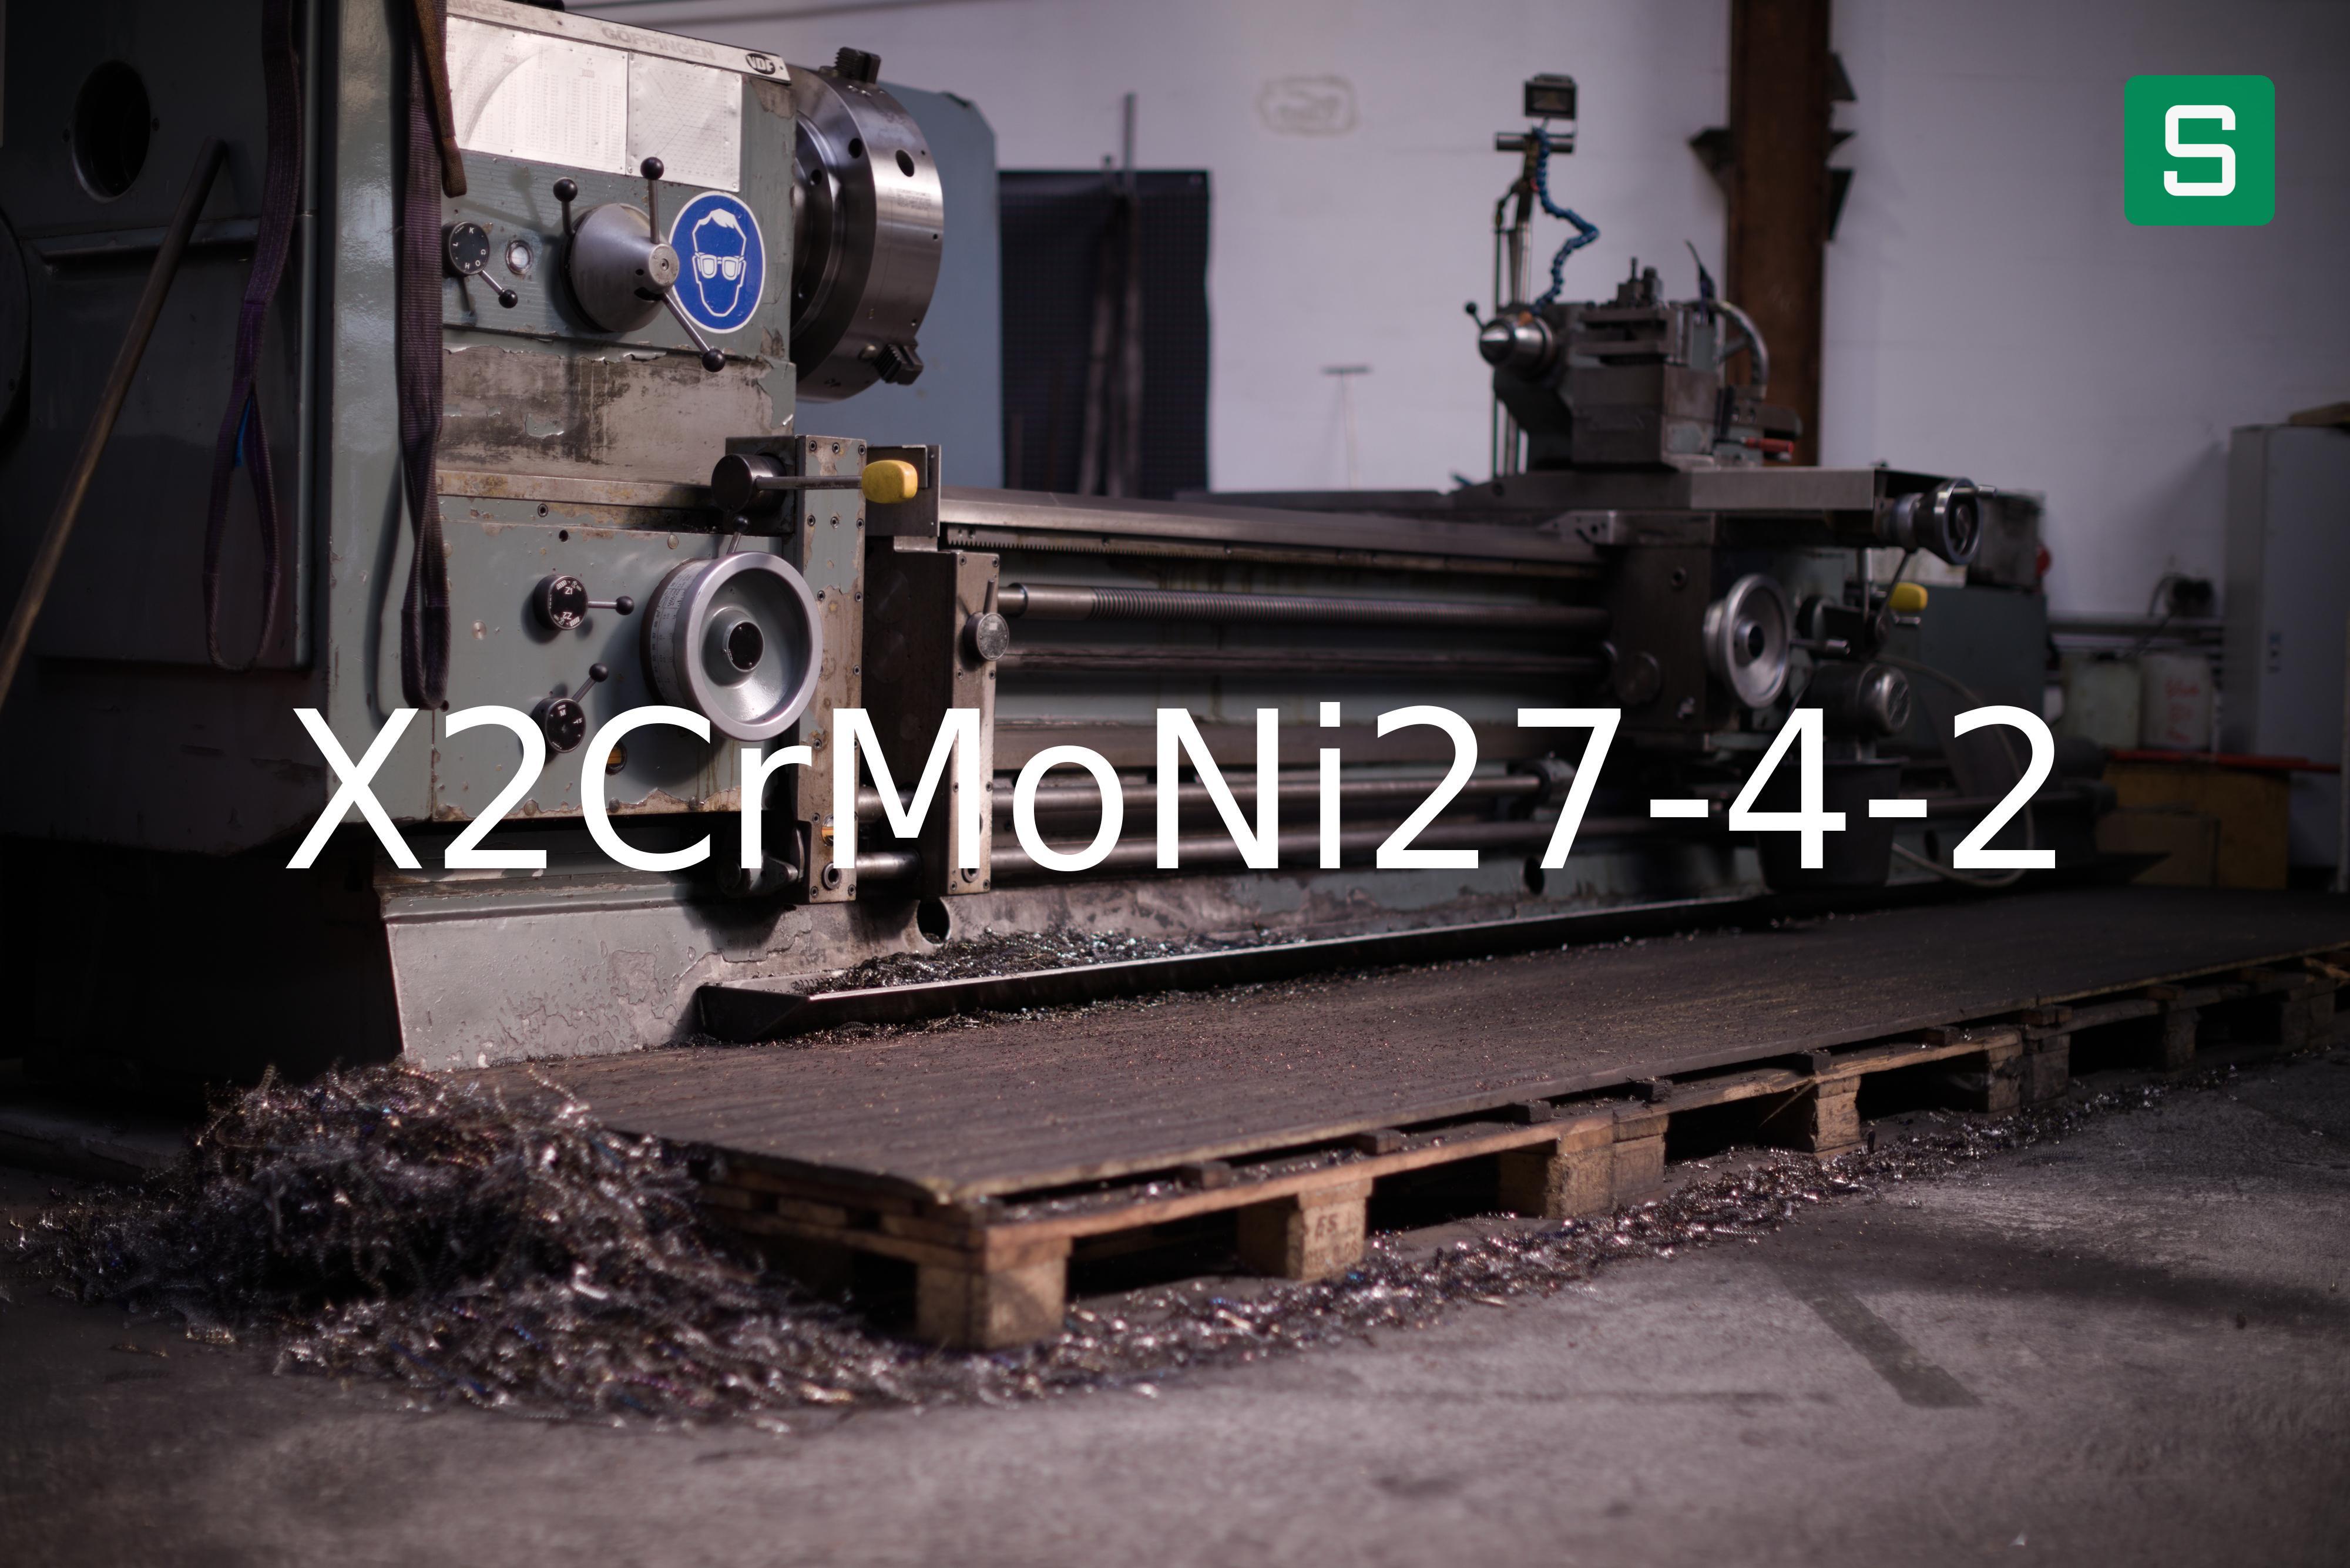 Steel Material: X2CrMoNi27-4-2